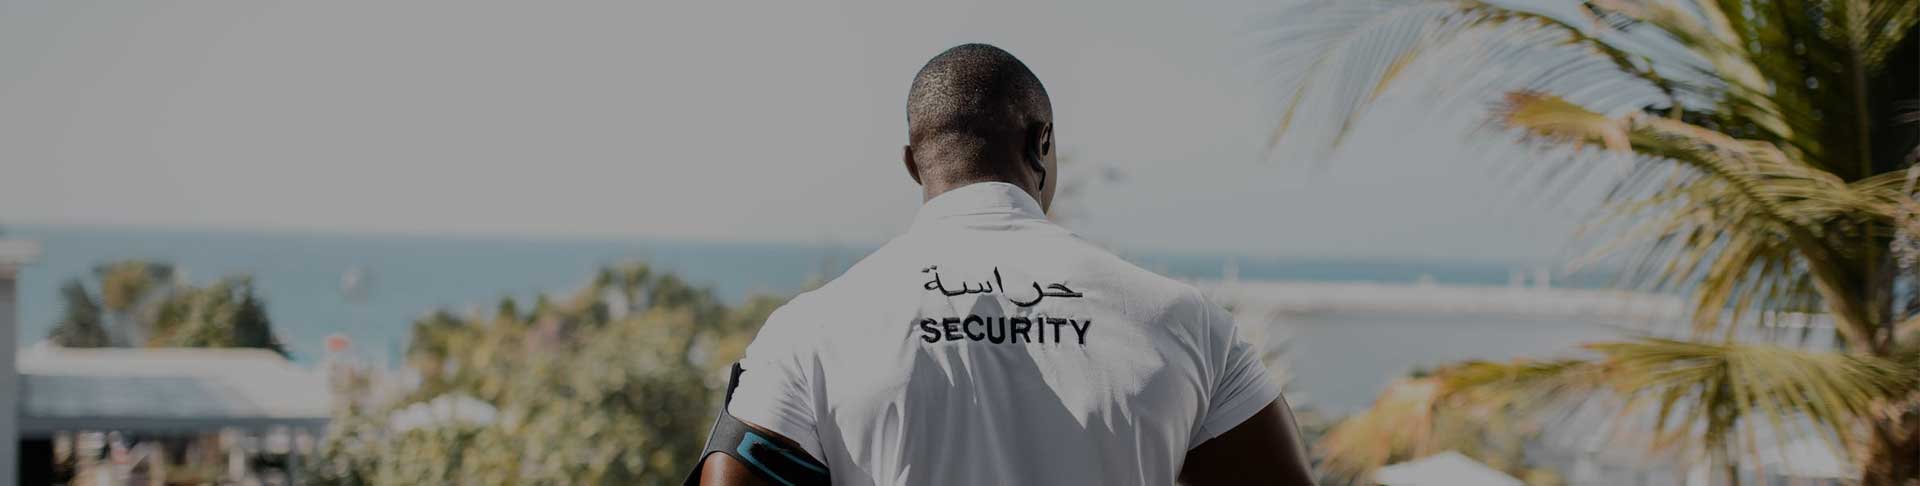 Personal Bodyguard Services UAE | Bodyguard Services Dubai